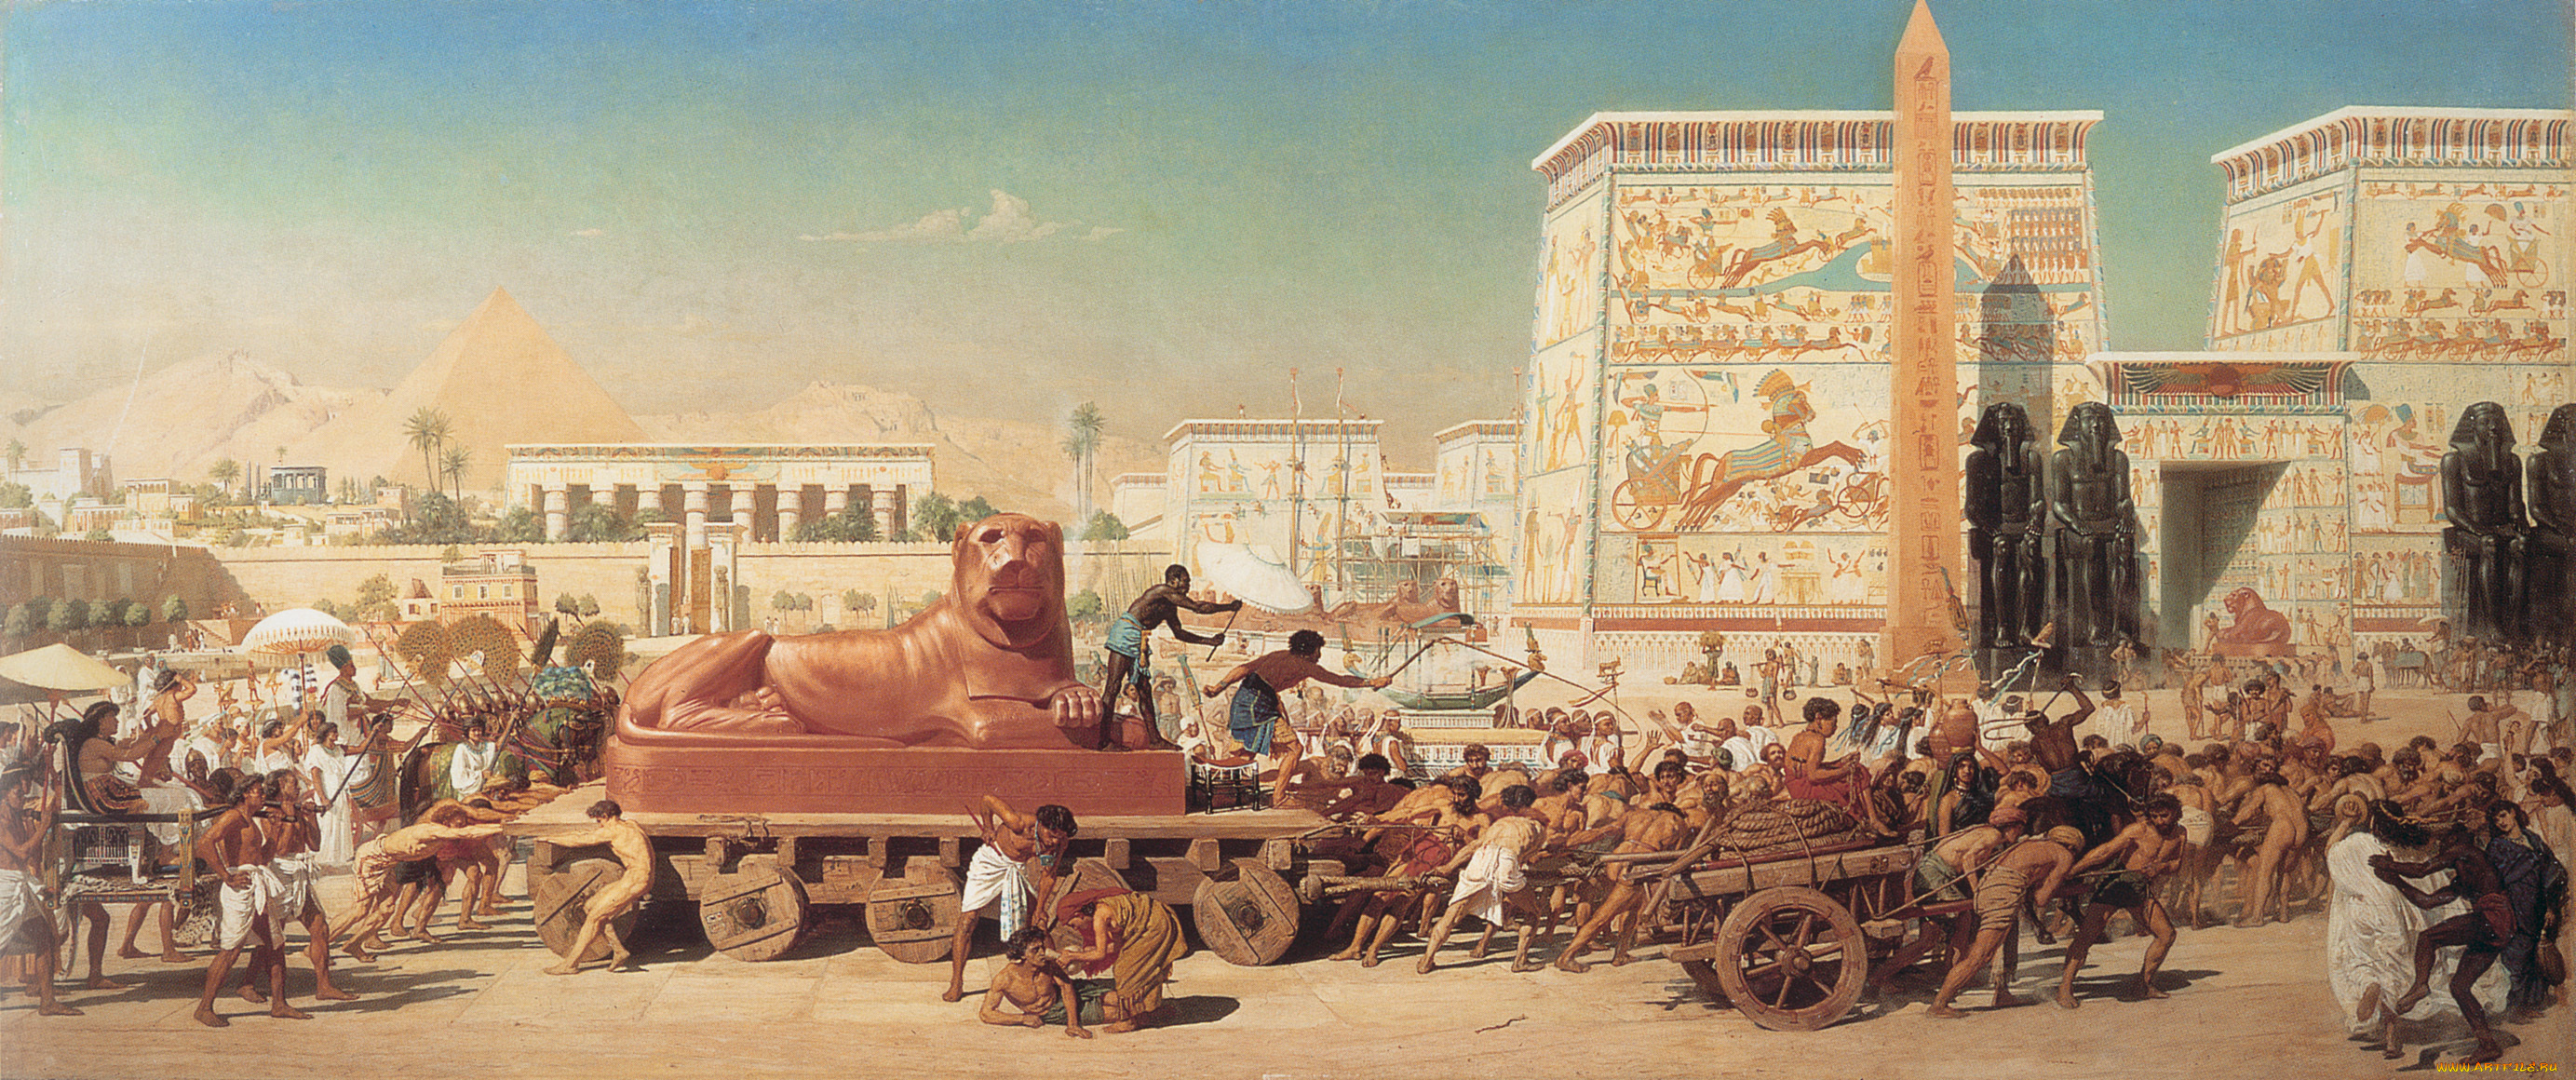 рисованные, edward, poynter, 1867, painting, israel, in, egypt